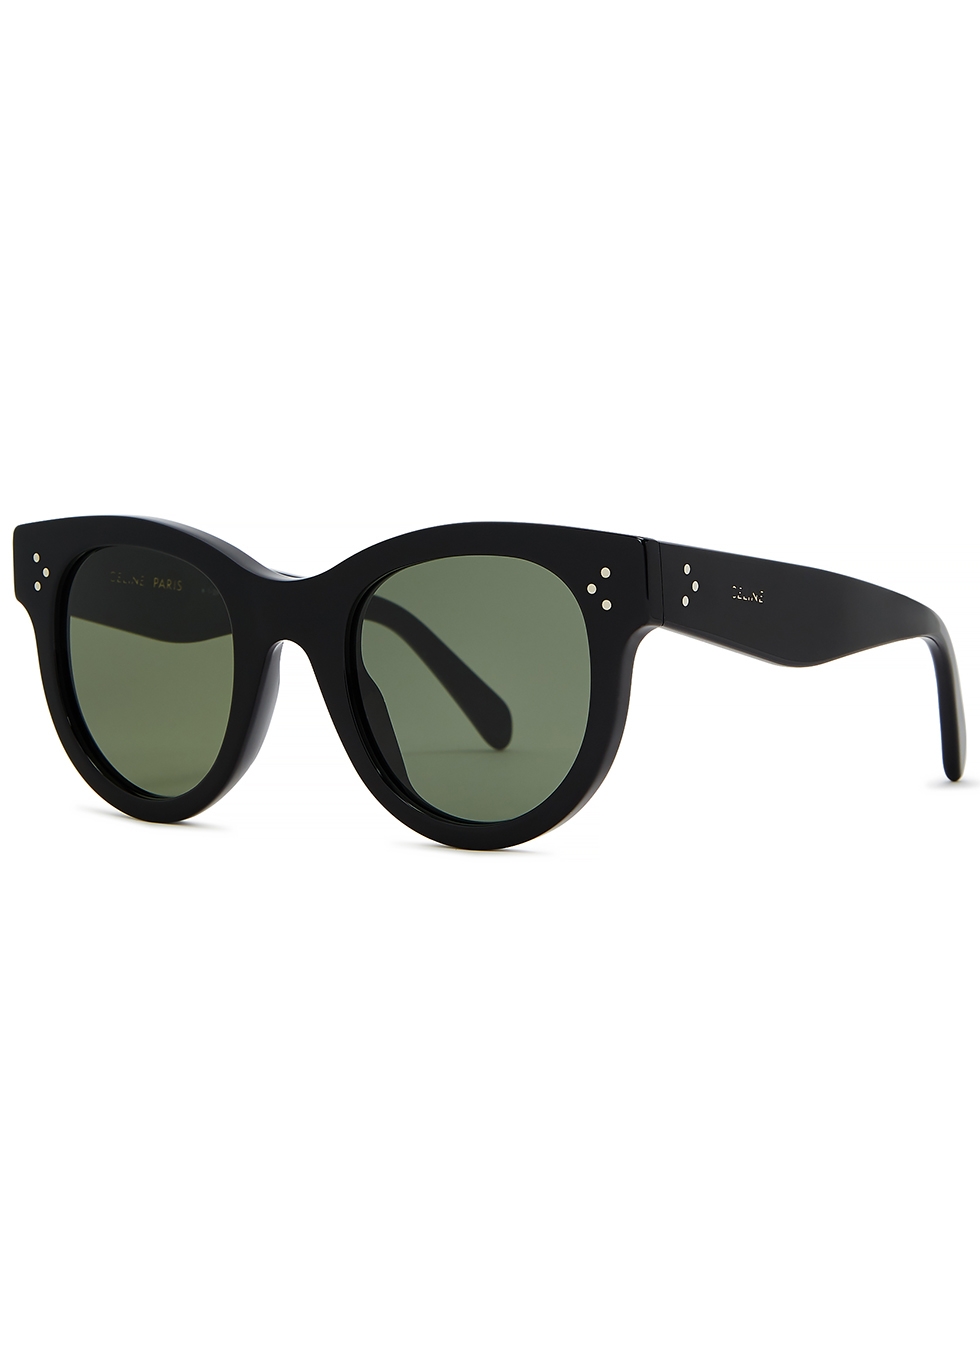 celine black frame sunglasses